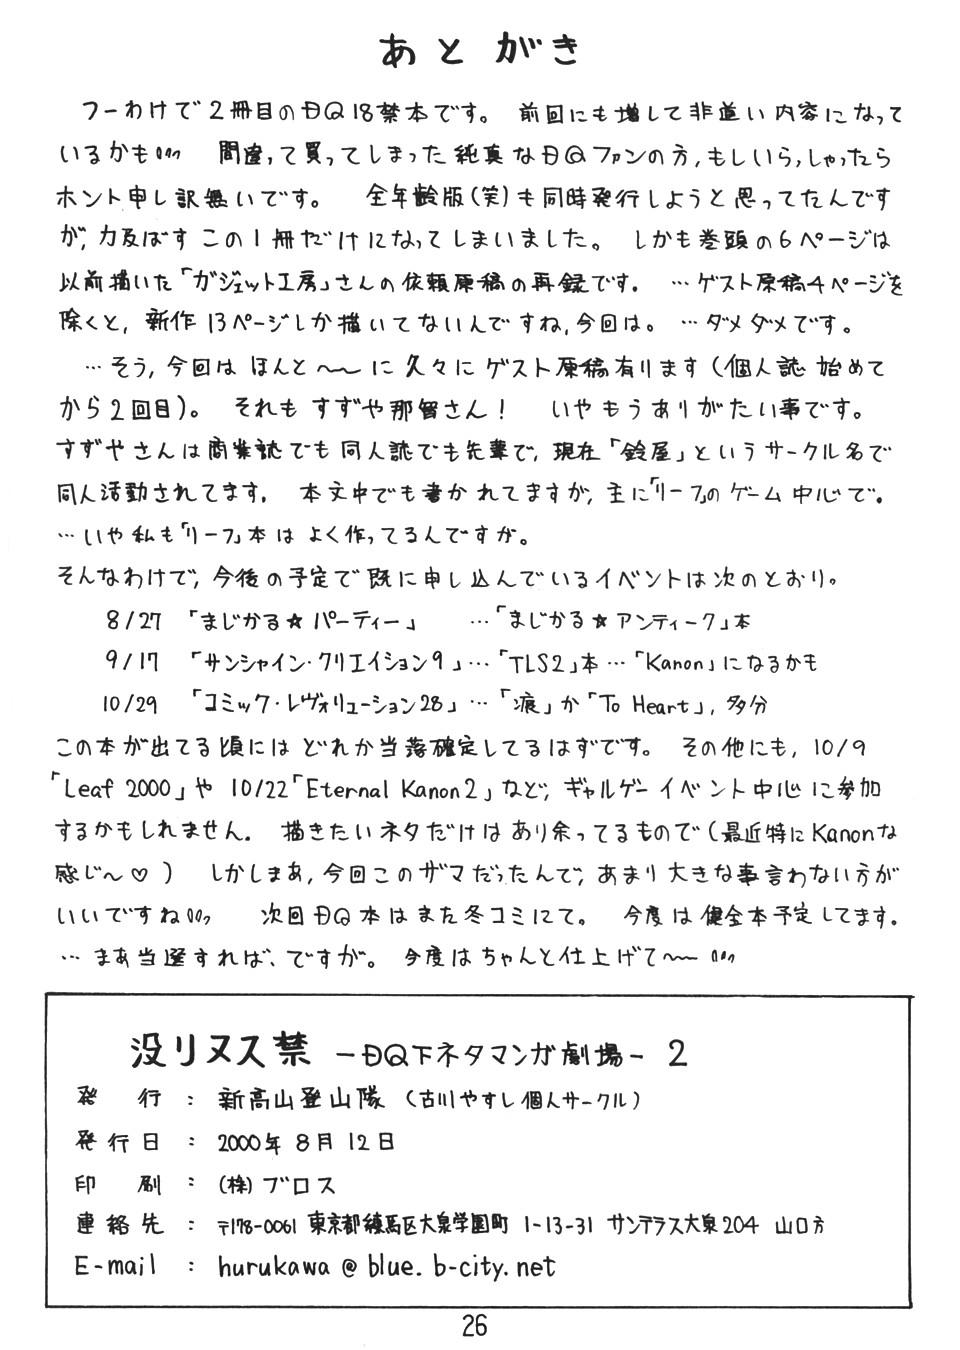 Clit Botsu Rinusu Kin 2 - Dragon quest Pale - Page 25